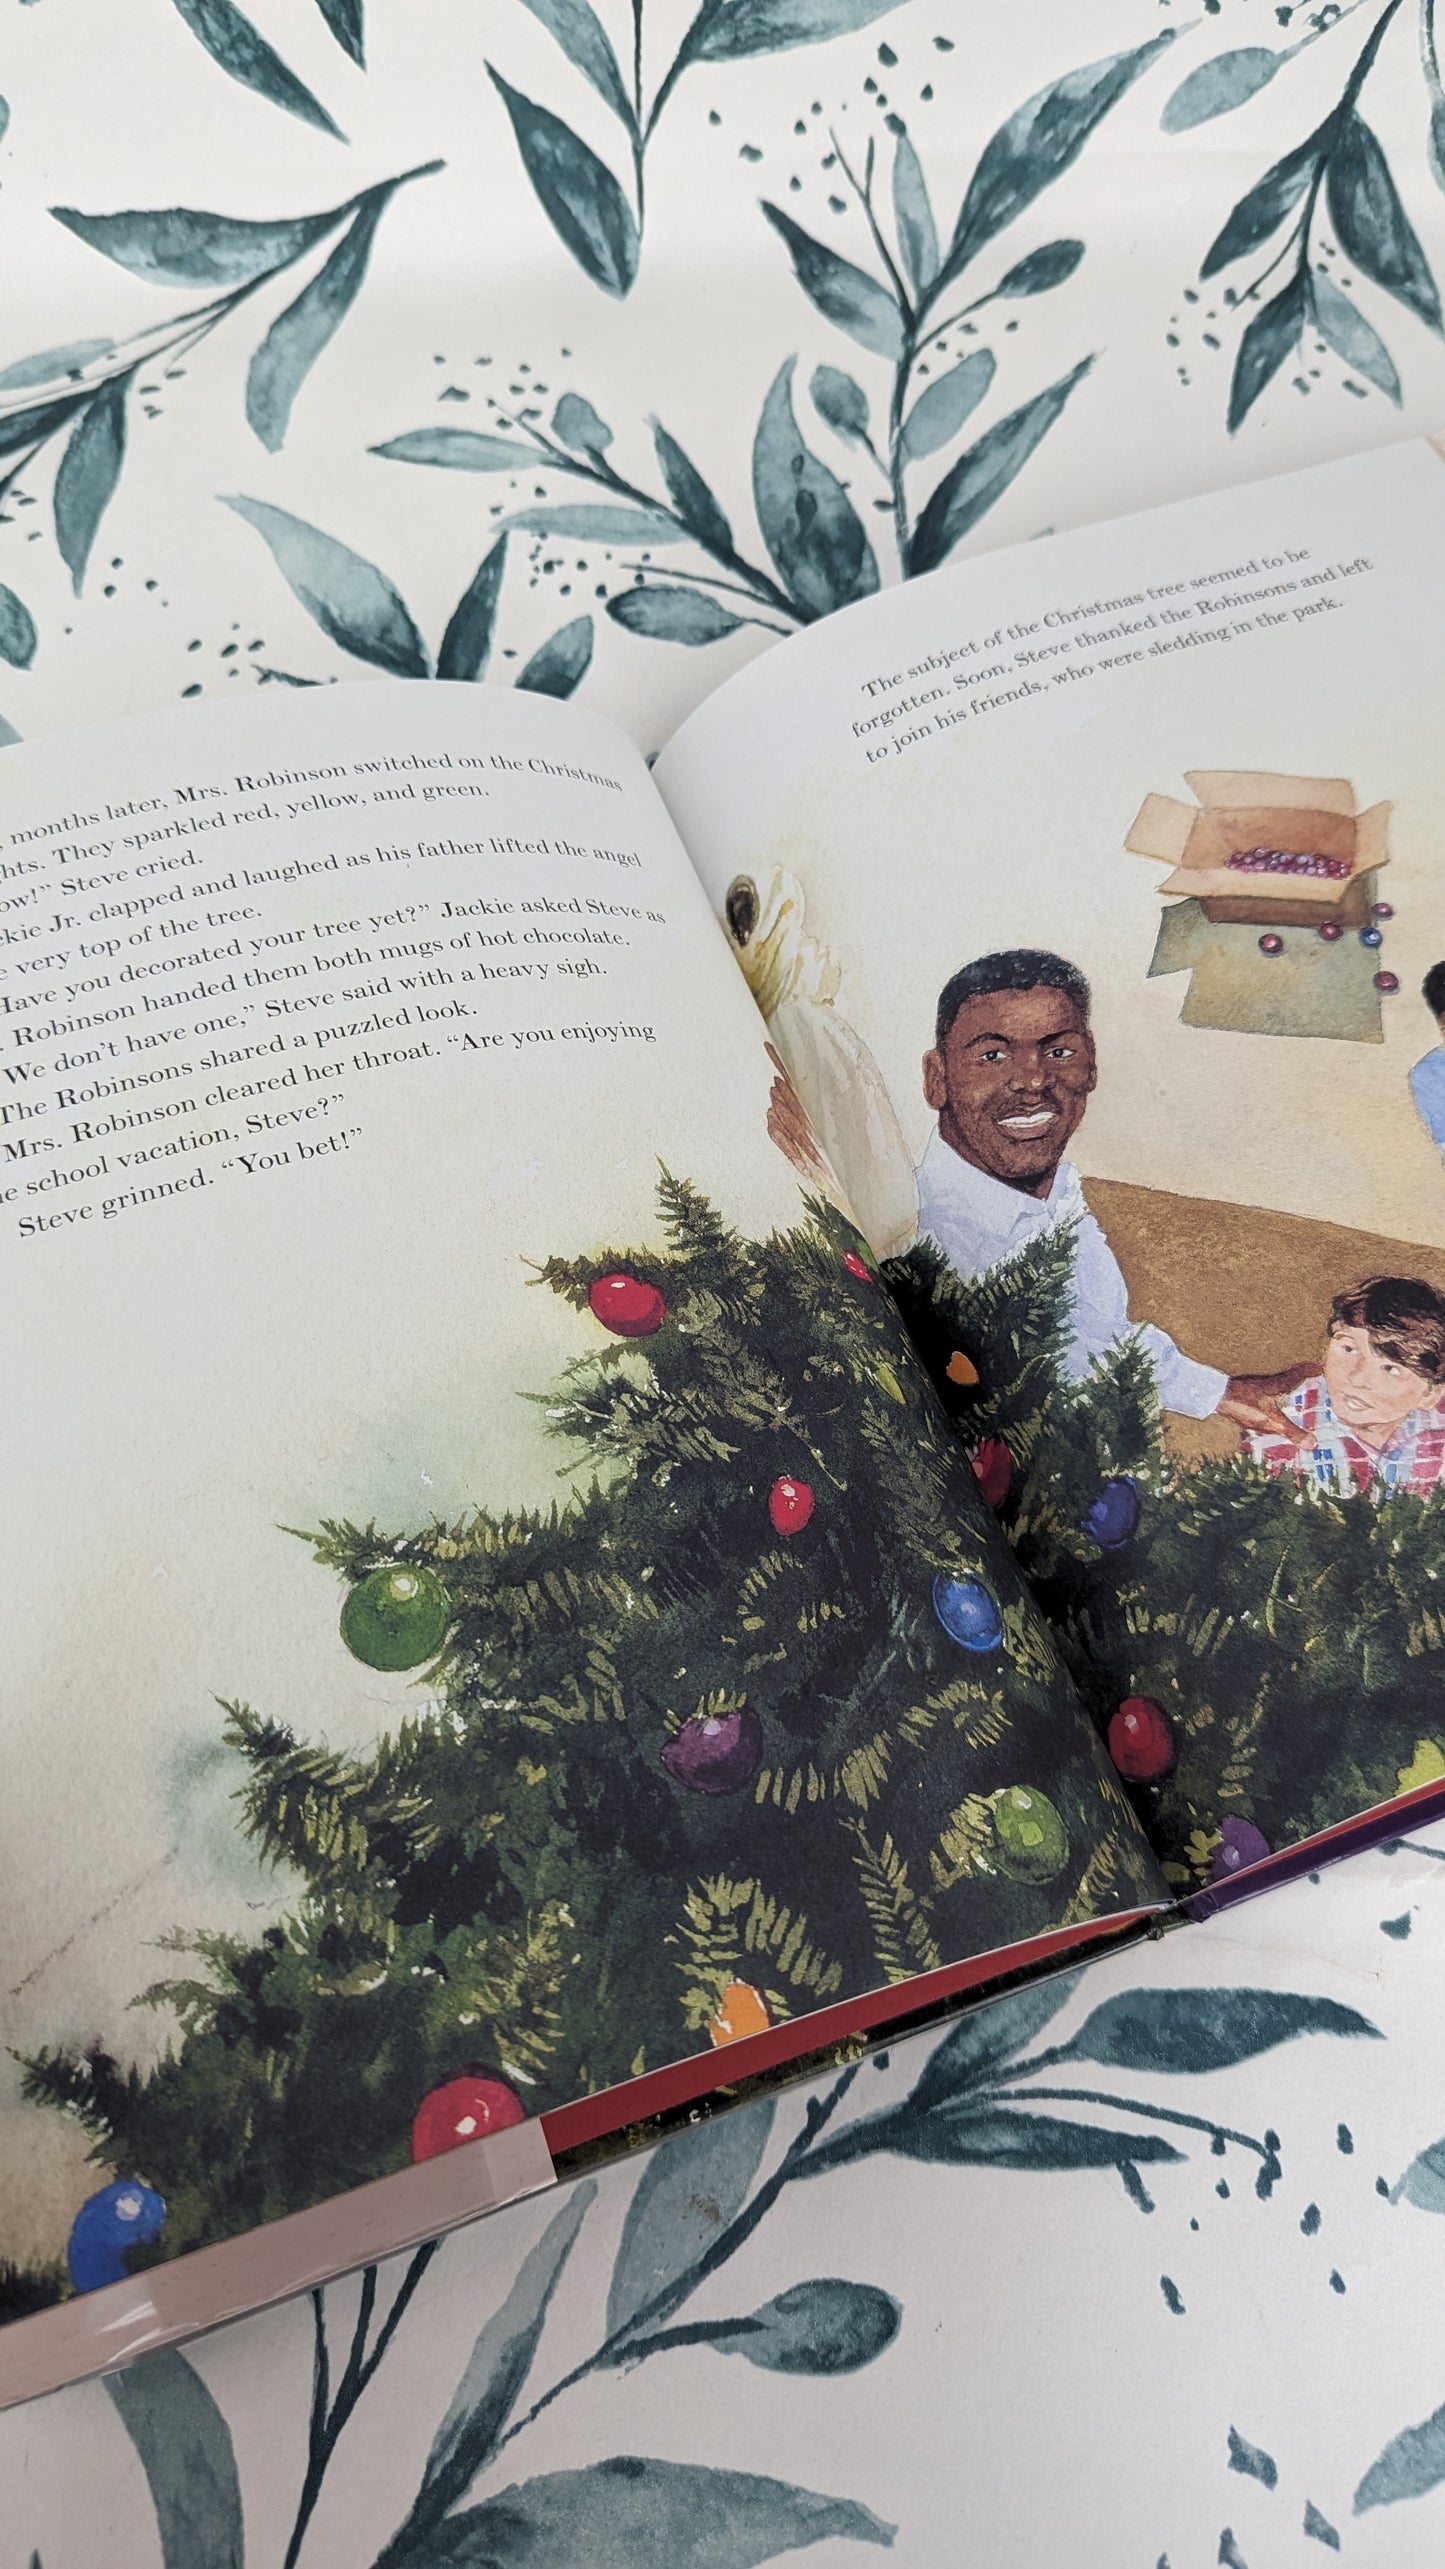 Jackie's Gift: A True Story of Christmas, Hanukkah, and Jackie Robinson